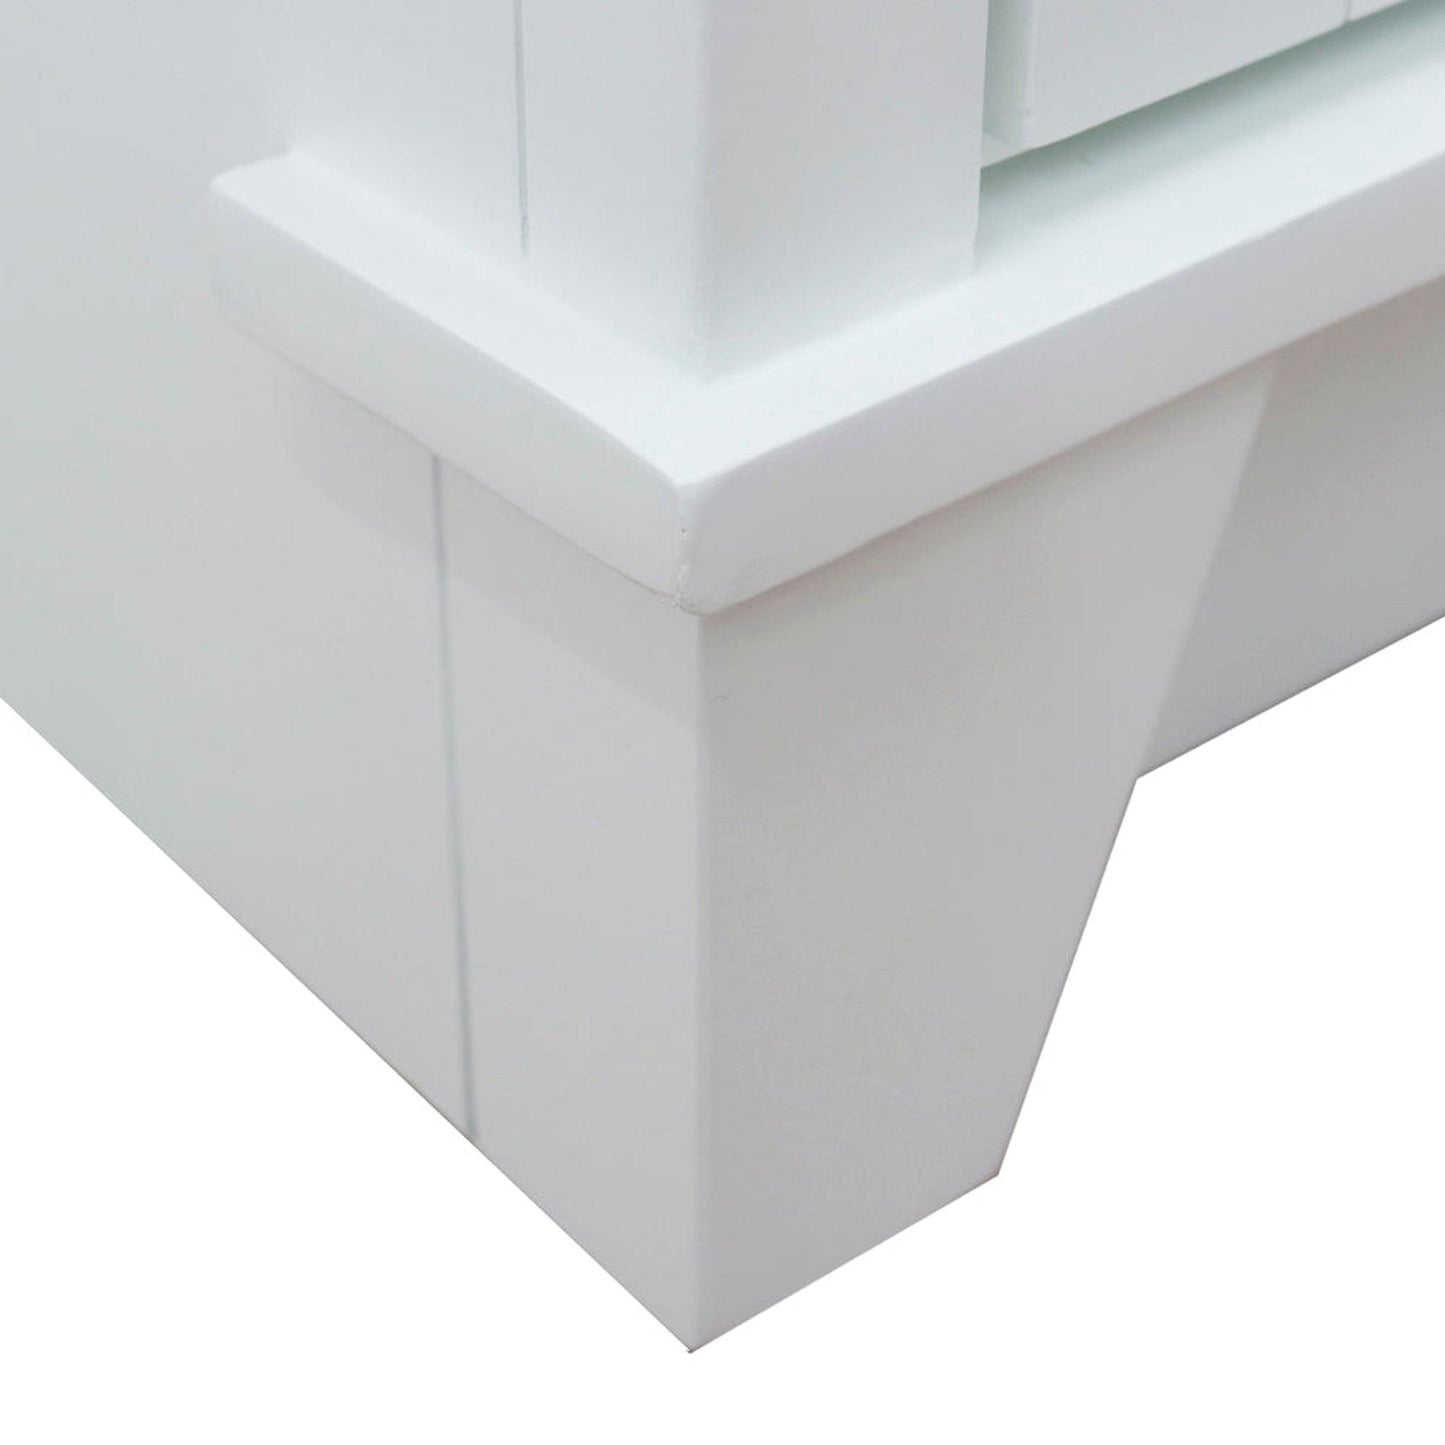 Bellaterra Home Terni 49" 2-Door 6-Drawer White Freestanding Vanity Set With Ceramic Vessel Sink and Gray Granite Top